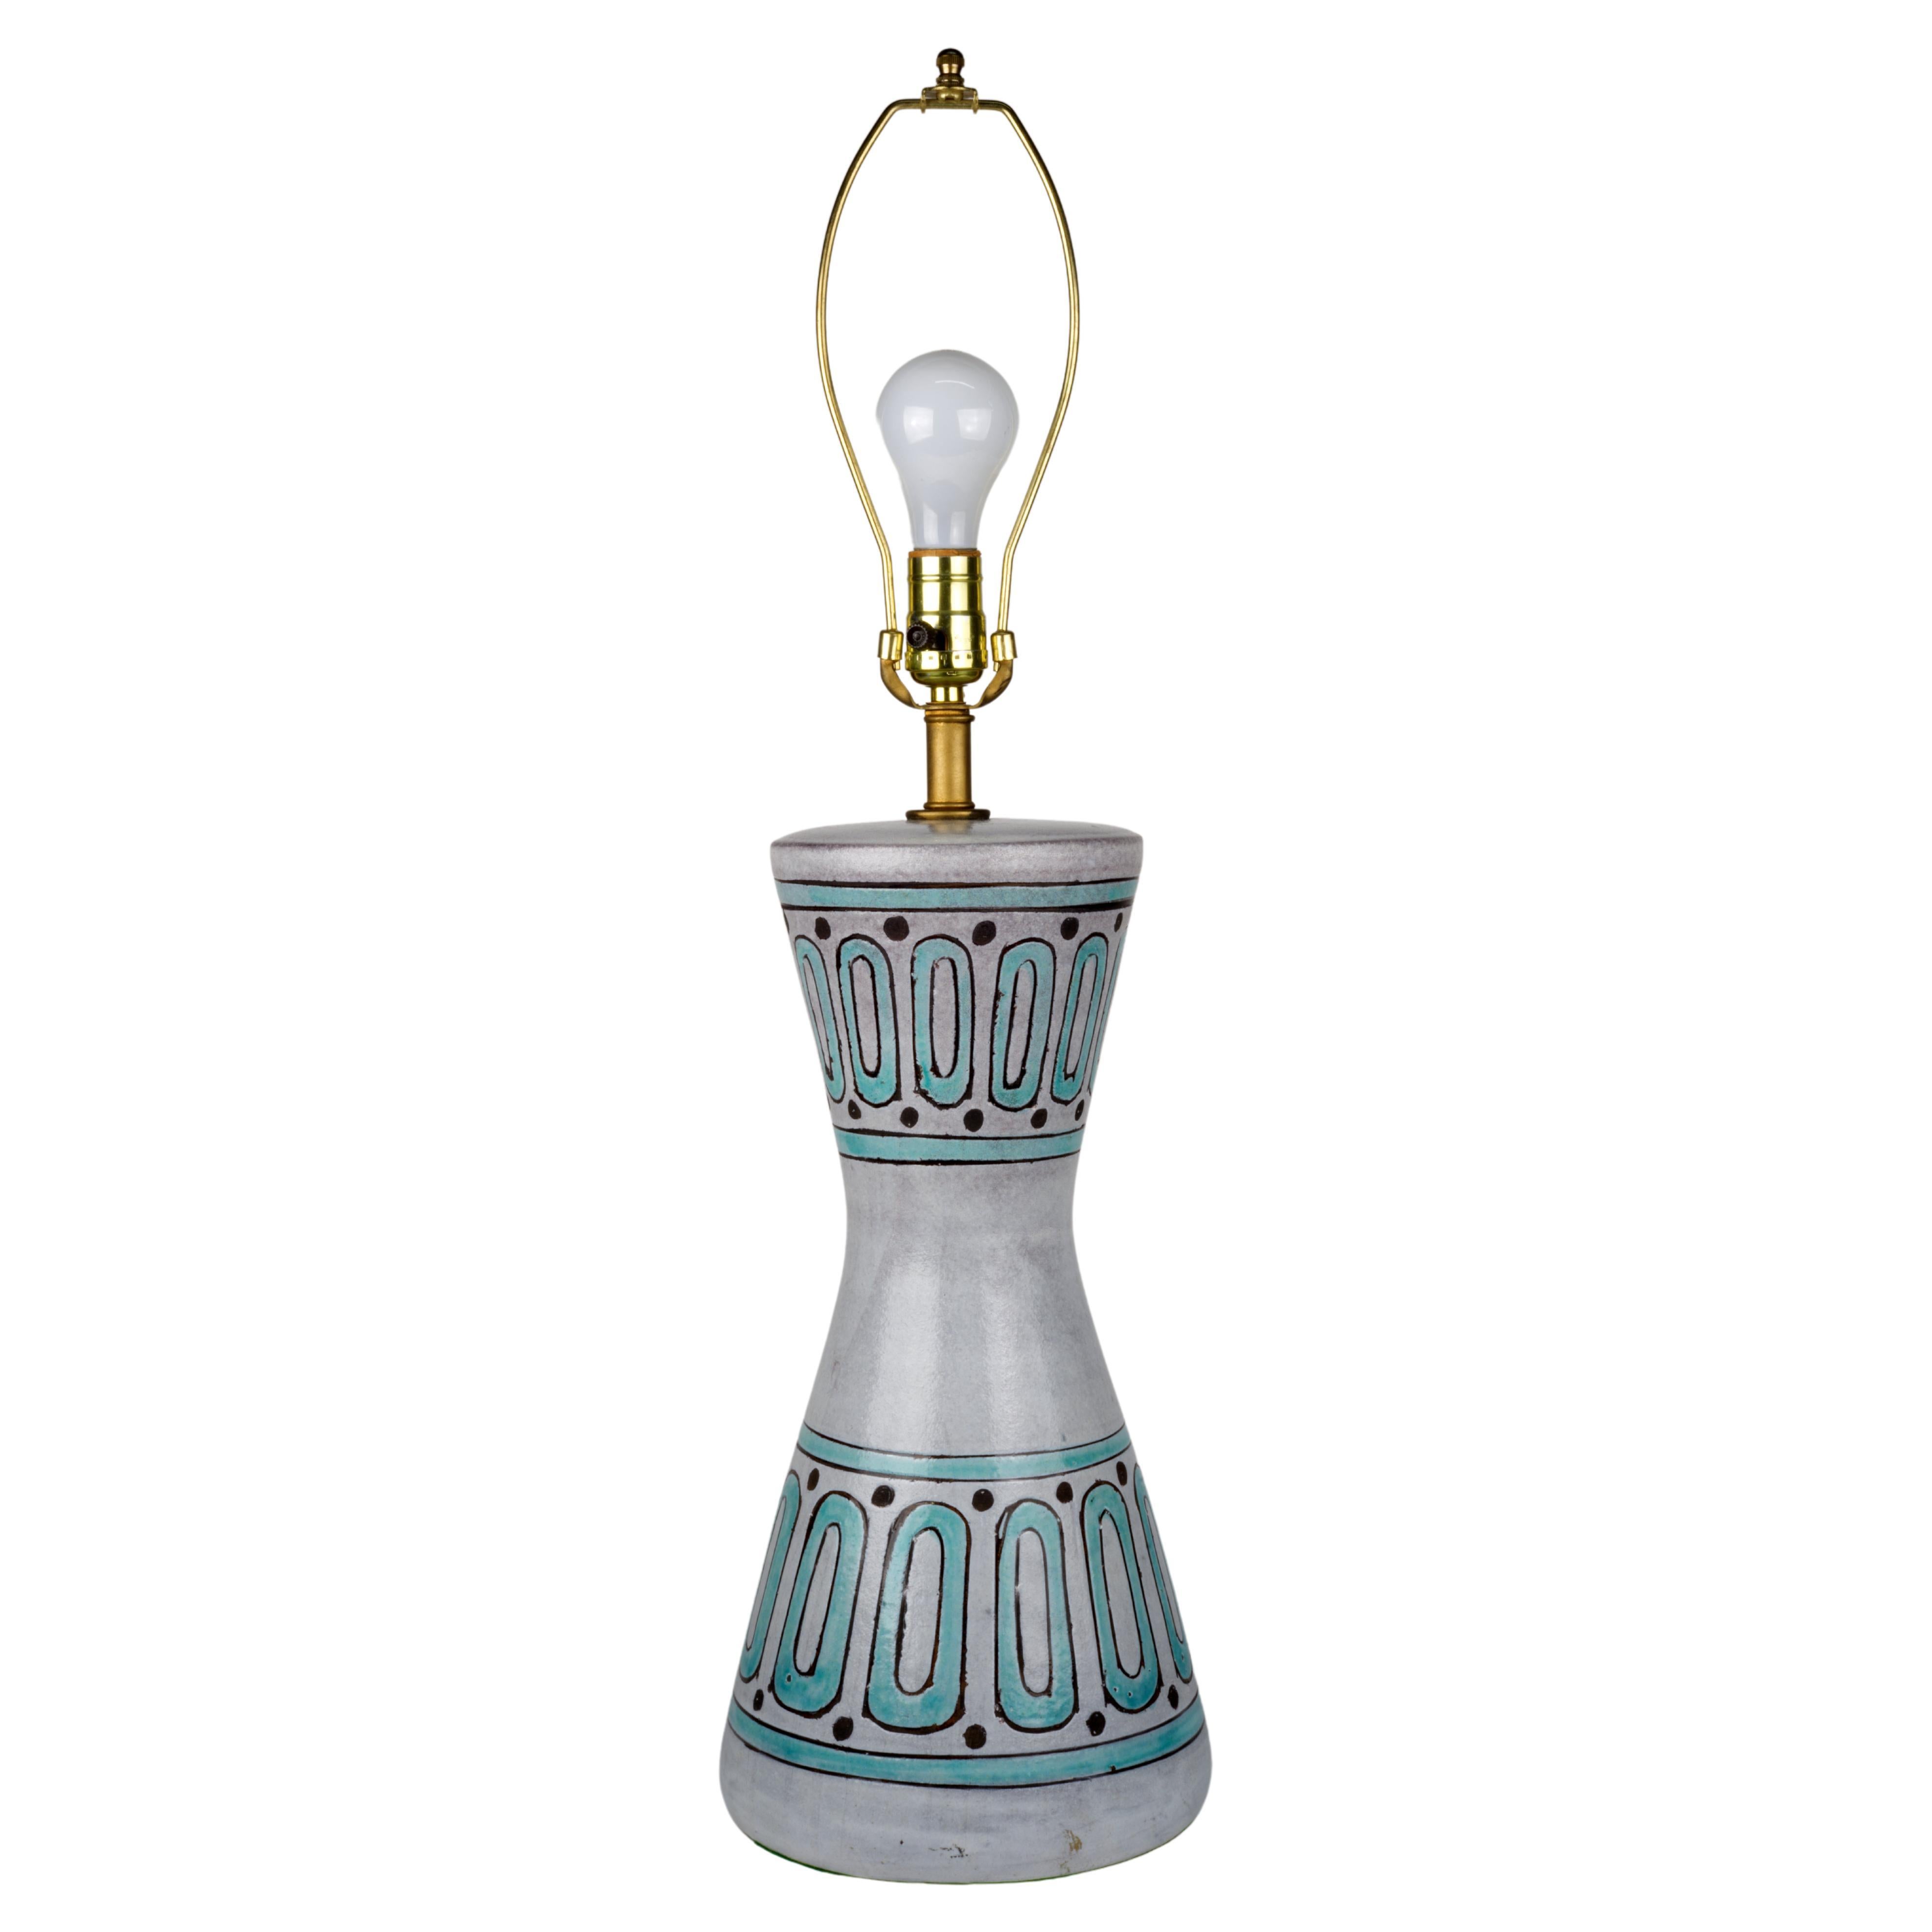 Aldo Londi for Bitossi Italy Mid Century Modern Ceramic Table Lamp For Sale